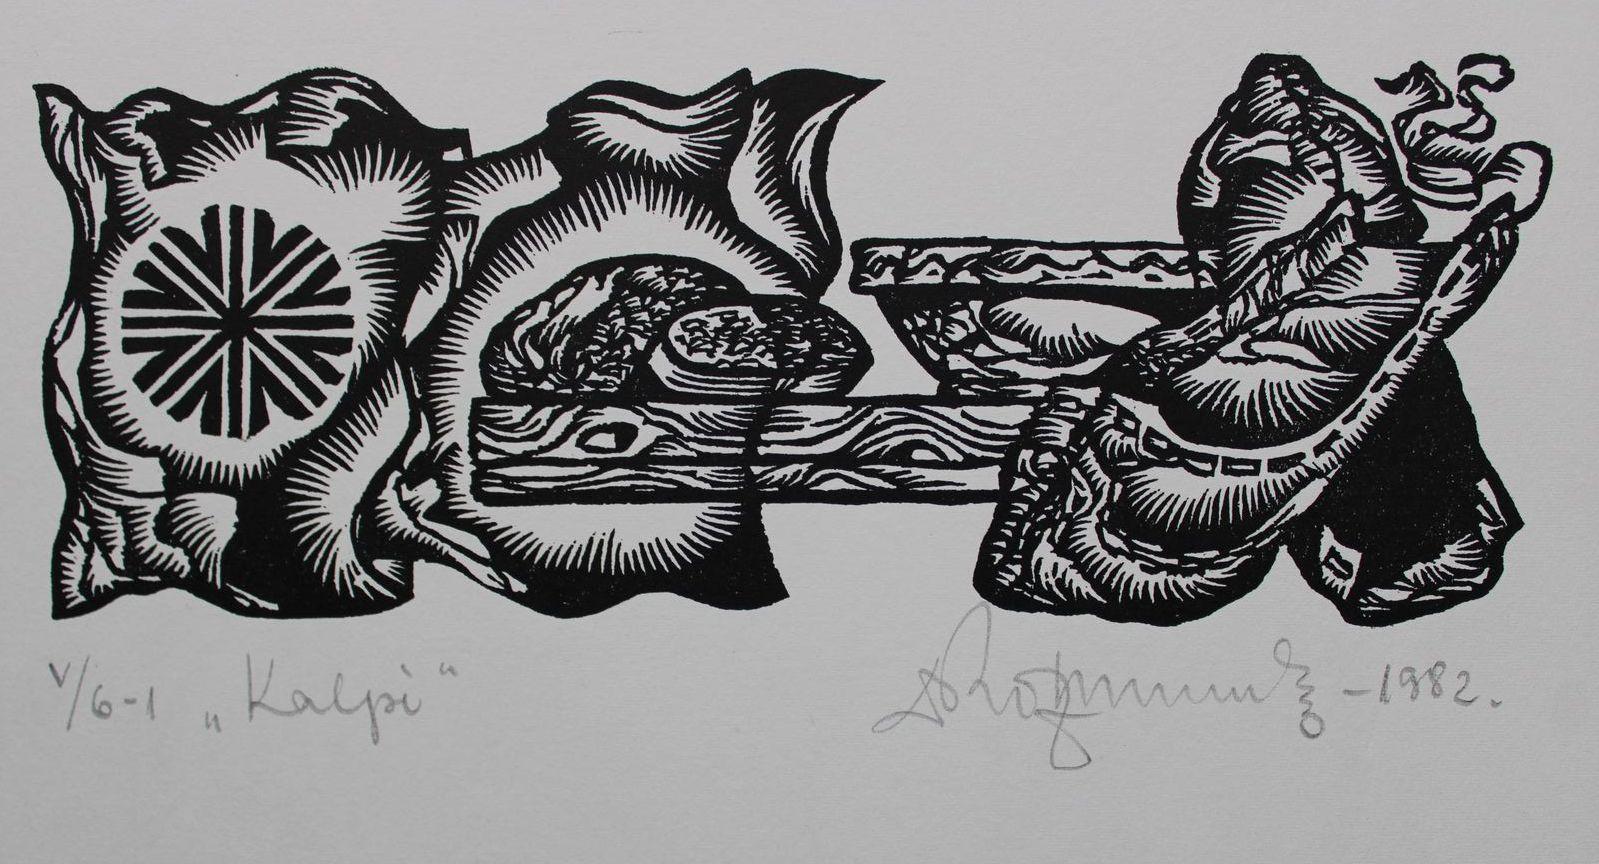 Diener. 1982. Papier, Linolschnitt, 20x34 cm